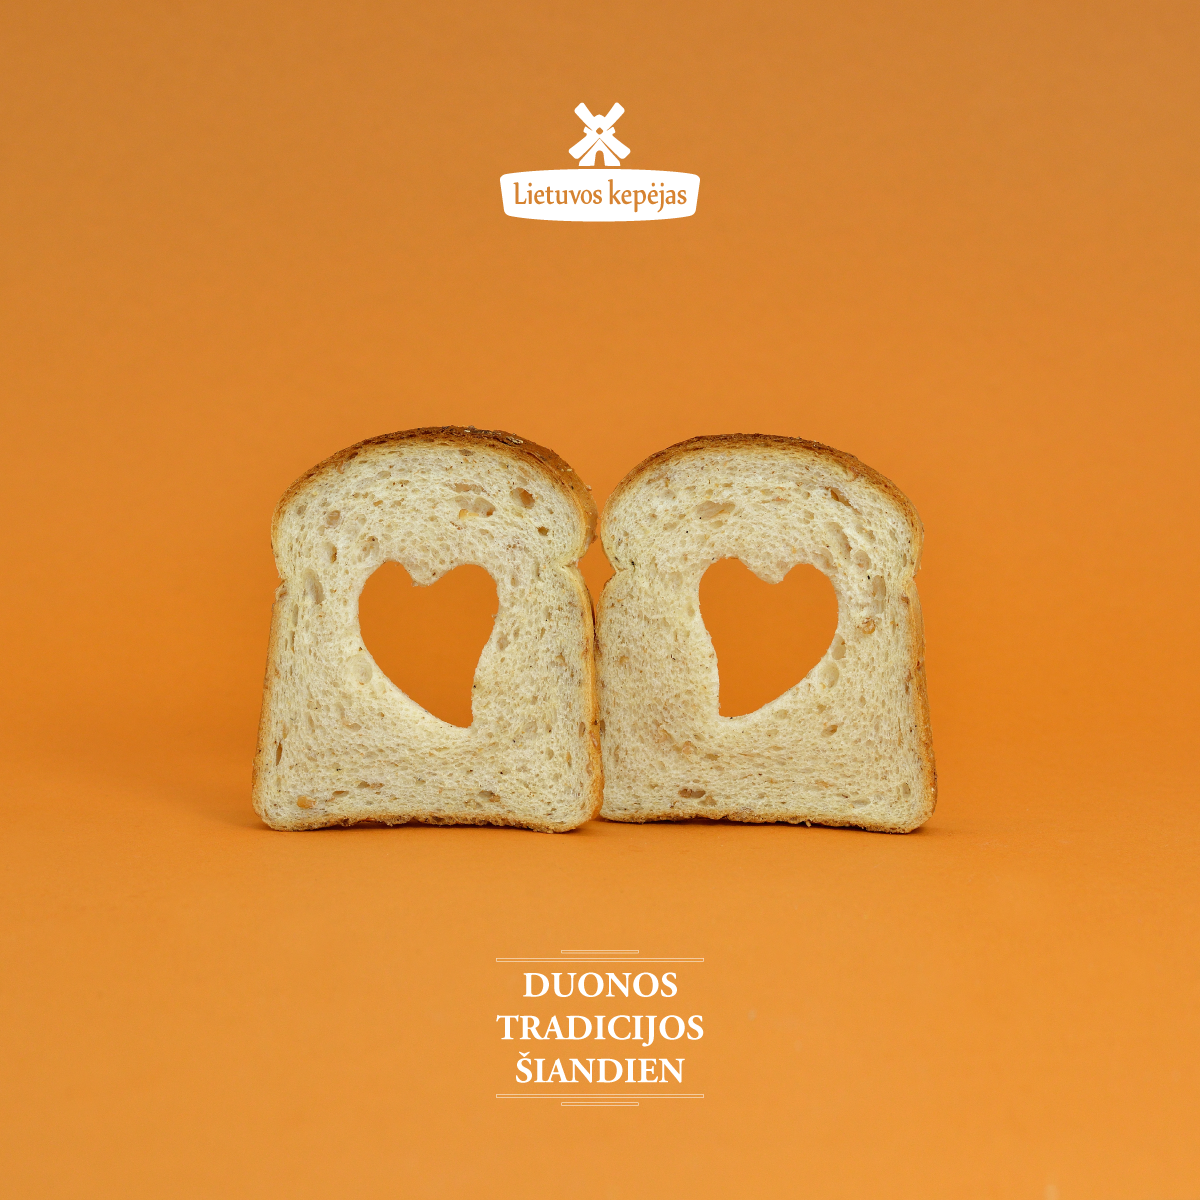 Adobe Portfolio Photography  branding  Food  Advertising  social media facebook instagram bread touch